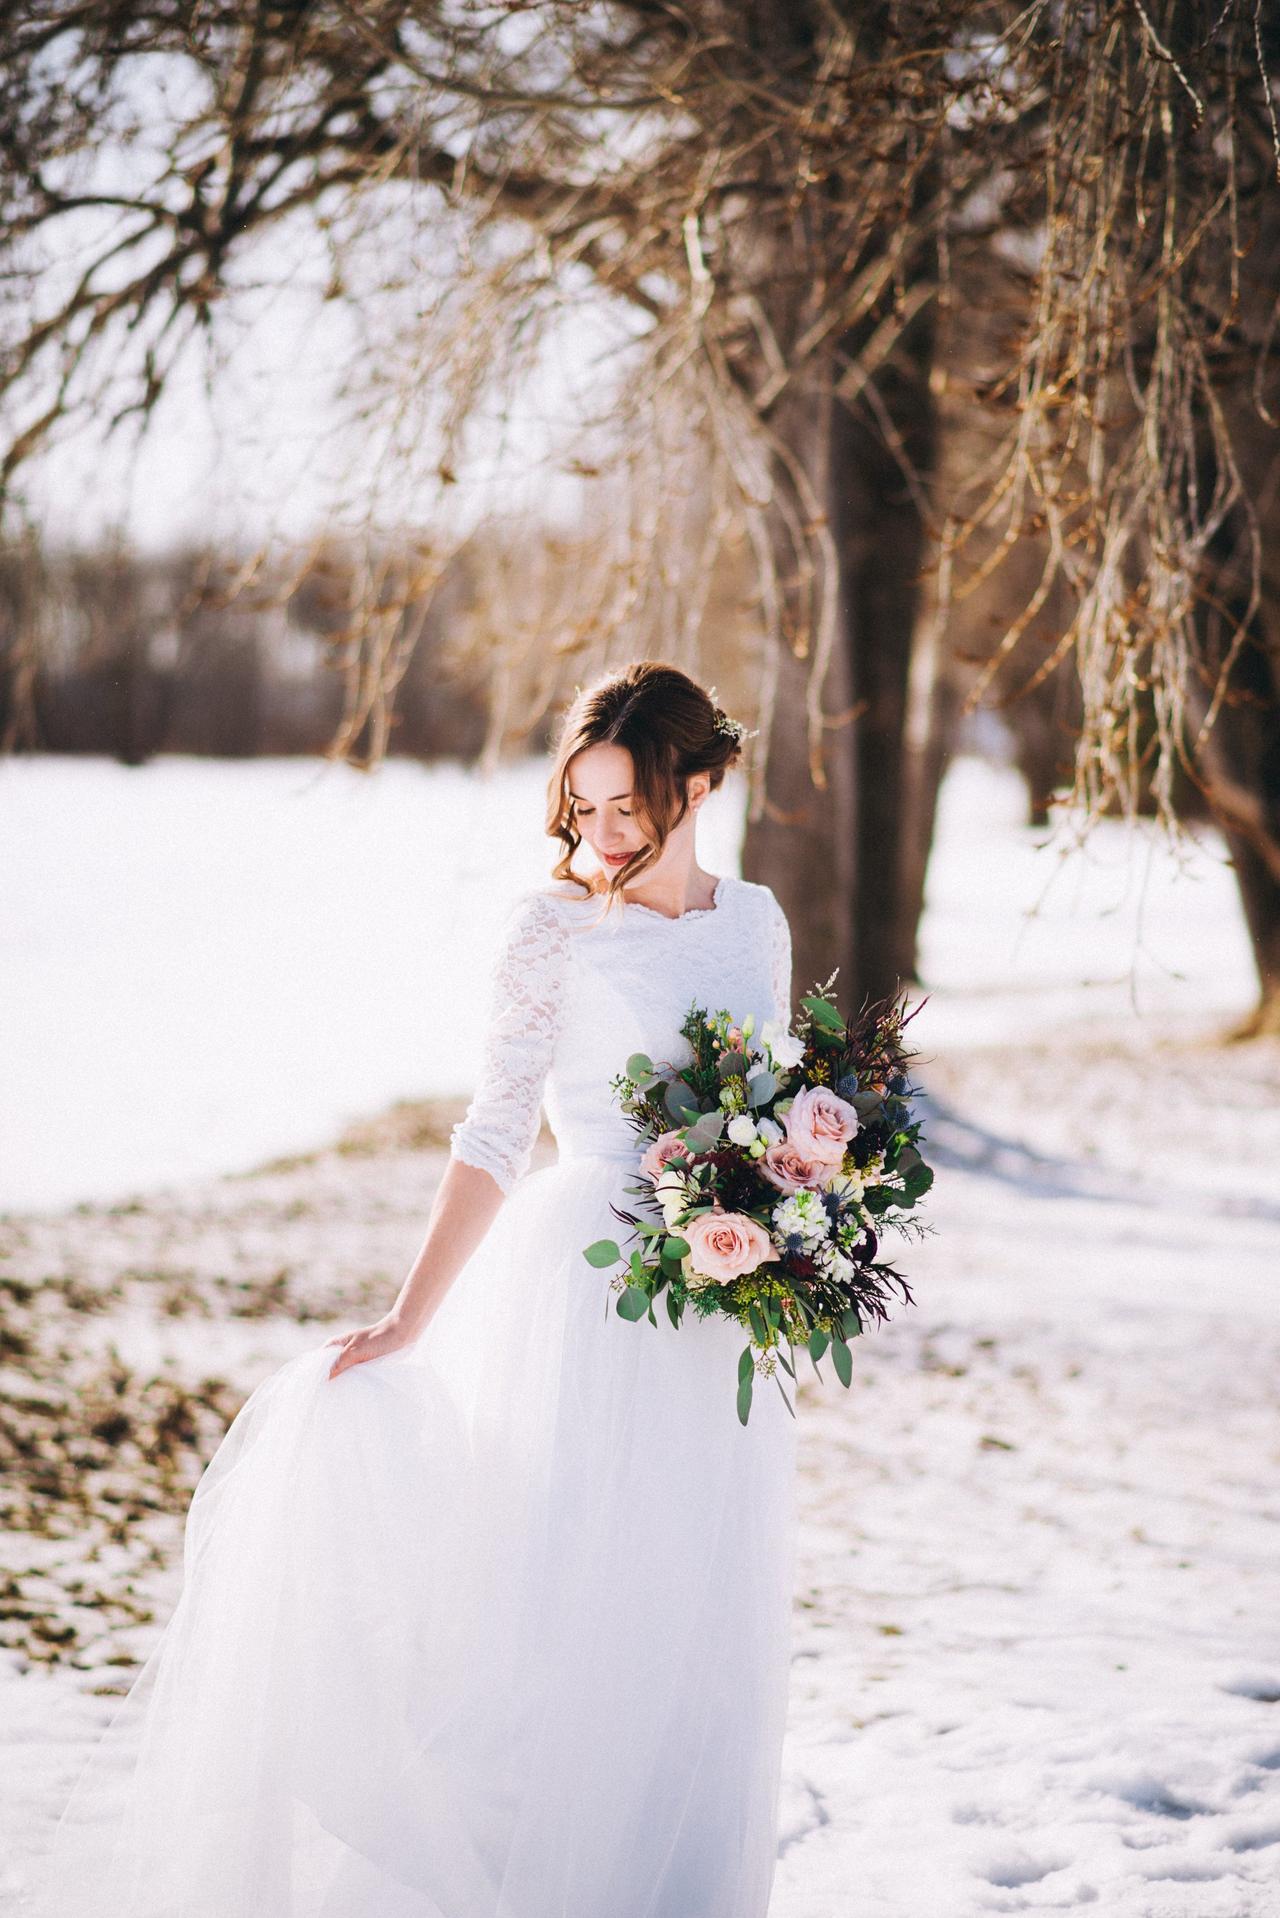 5 Tips for Choosing a Winter Wedding Dress